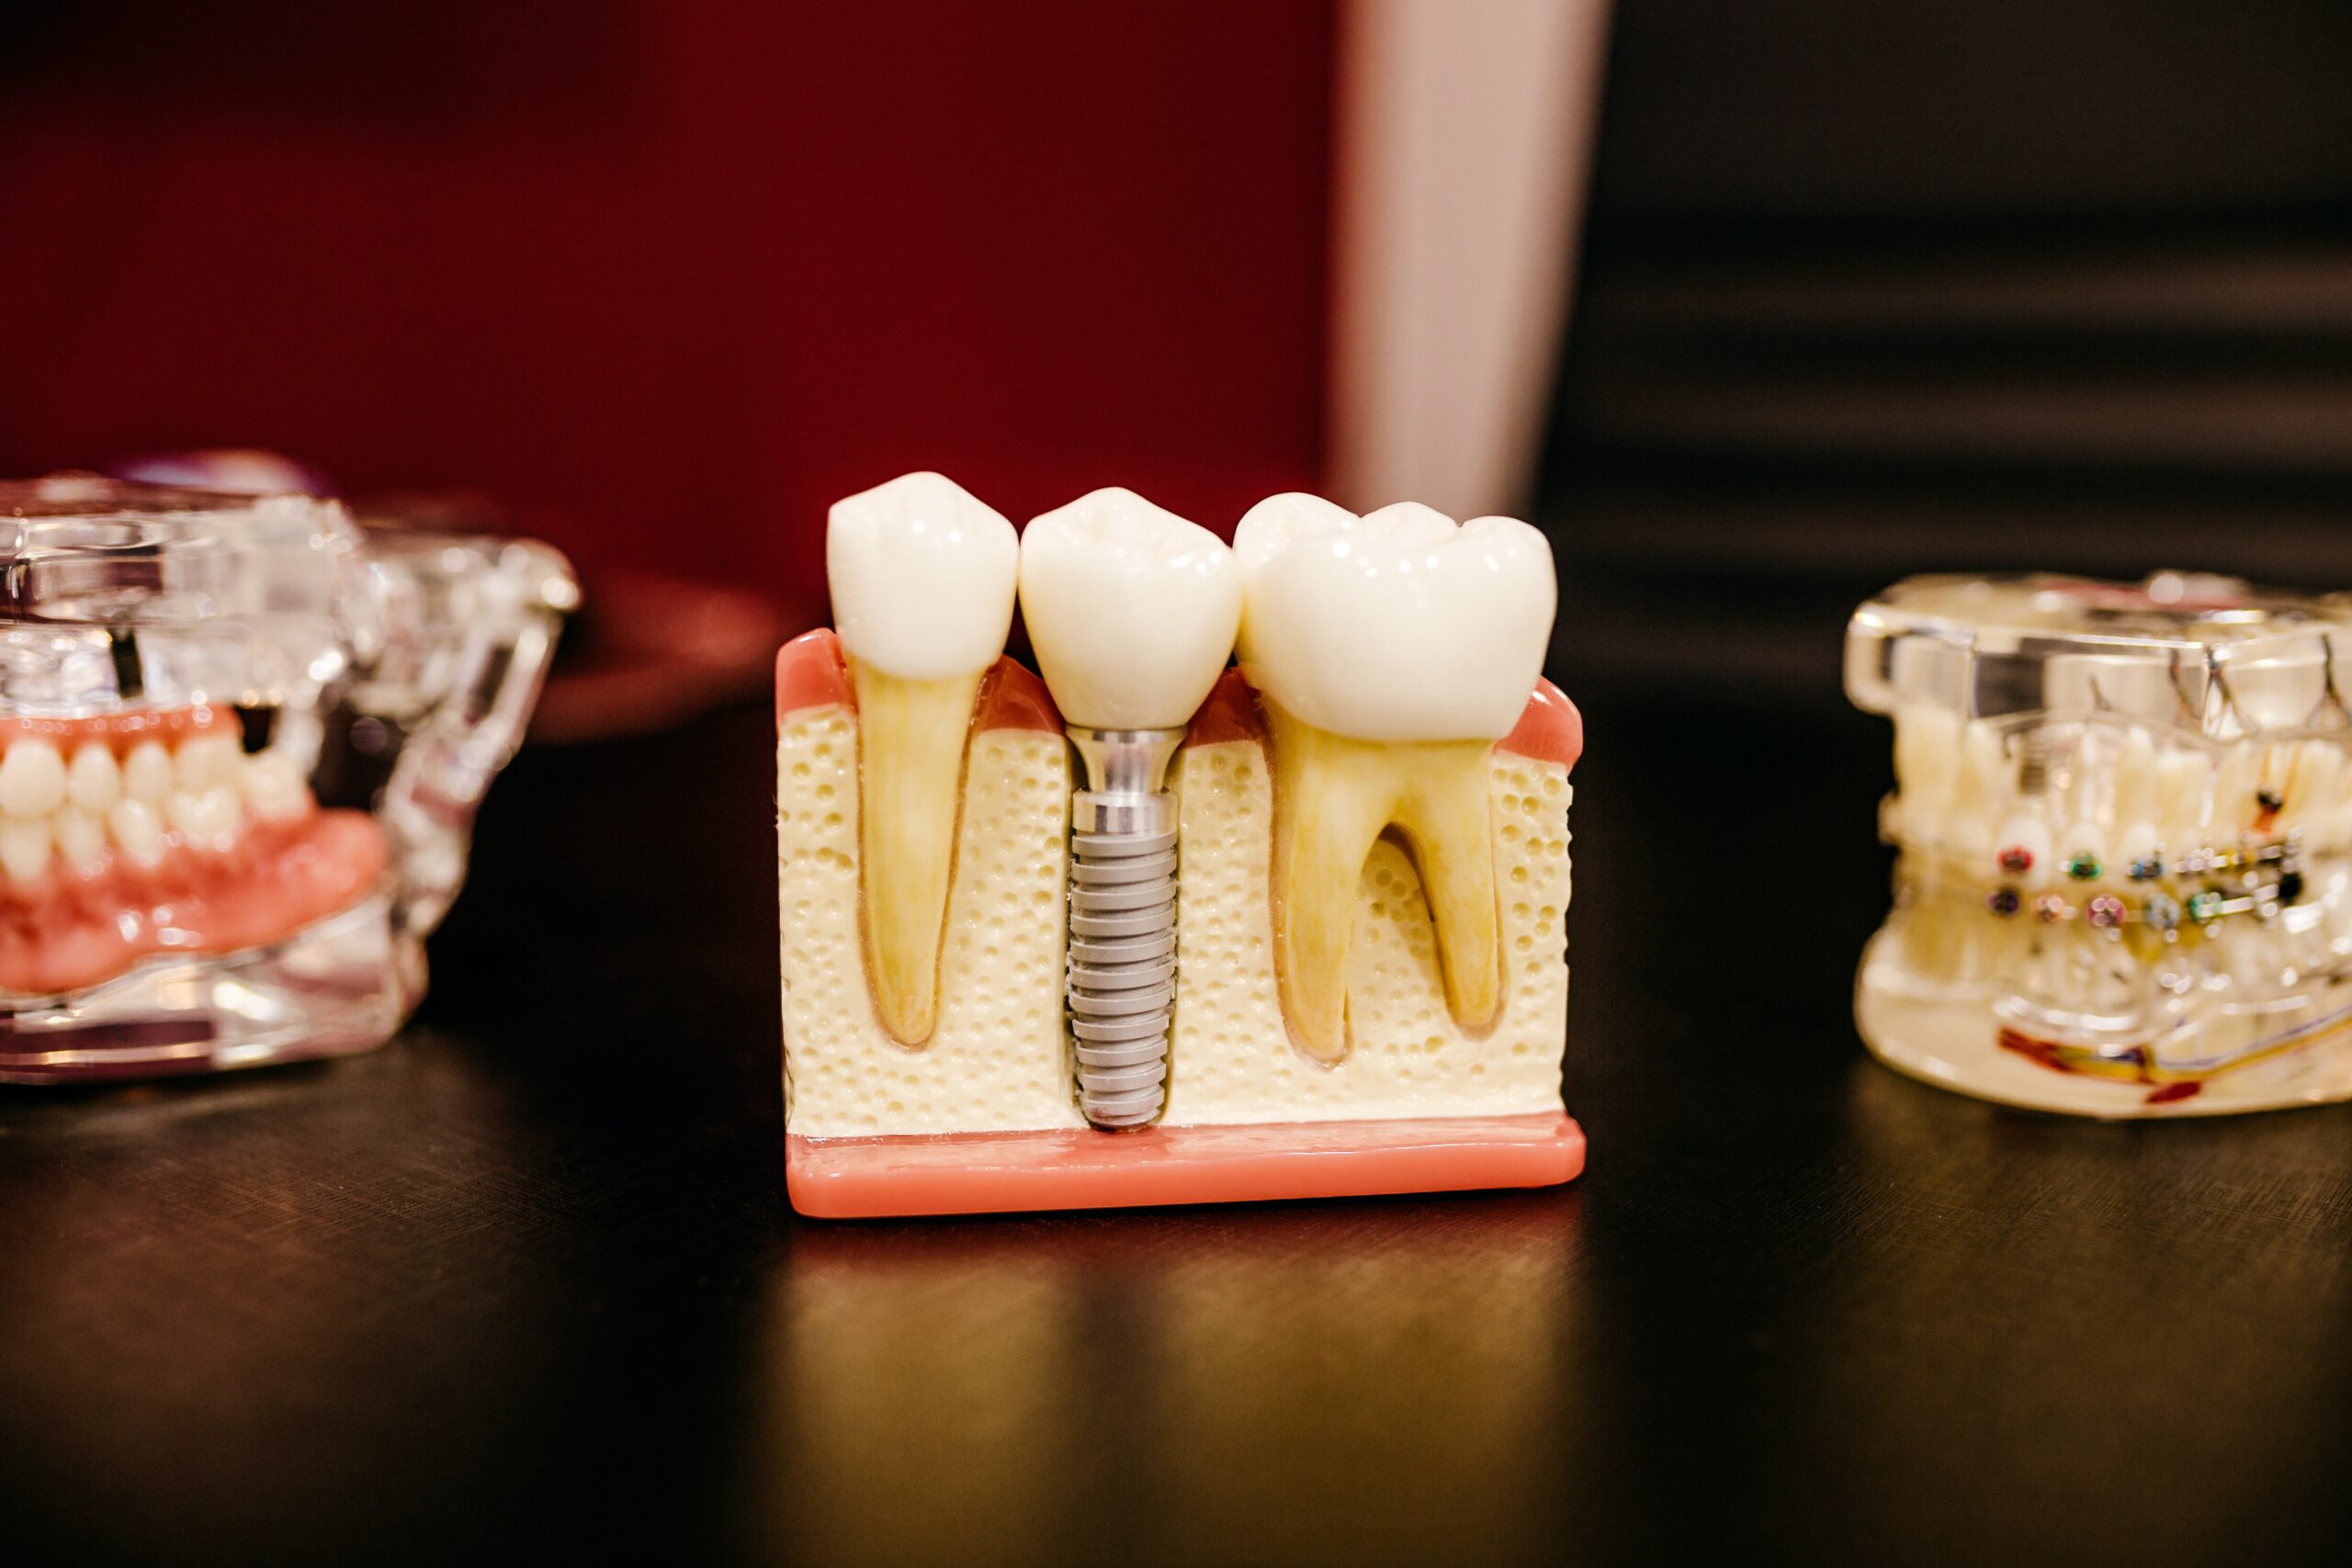 4 beneficii aduse de catre un implant dentar. Iata de ce merita sa apelezi la un asemenea tratament!